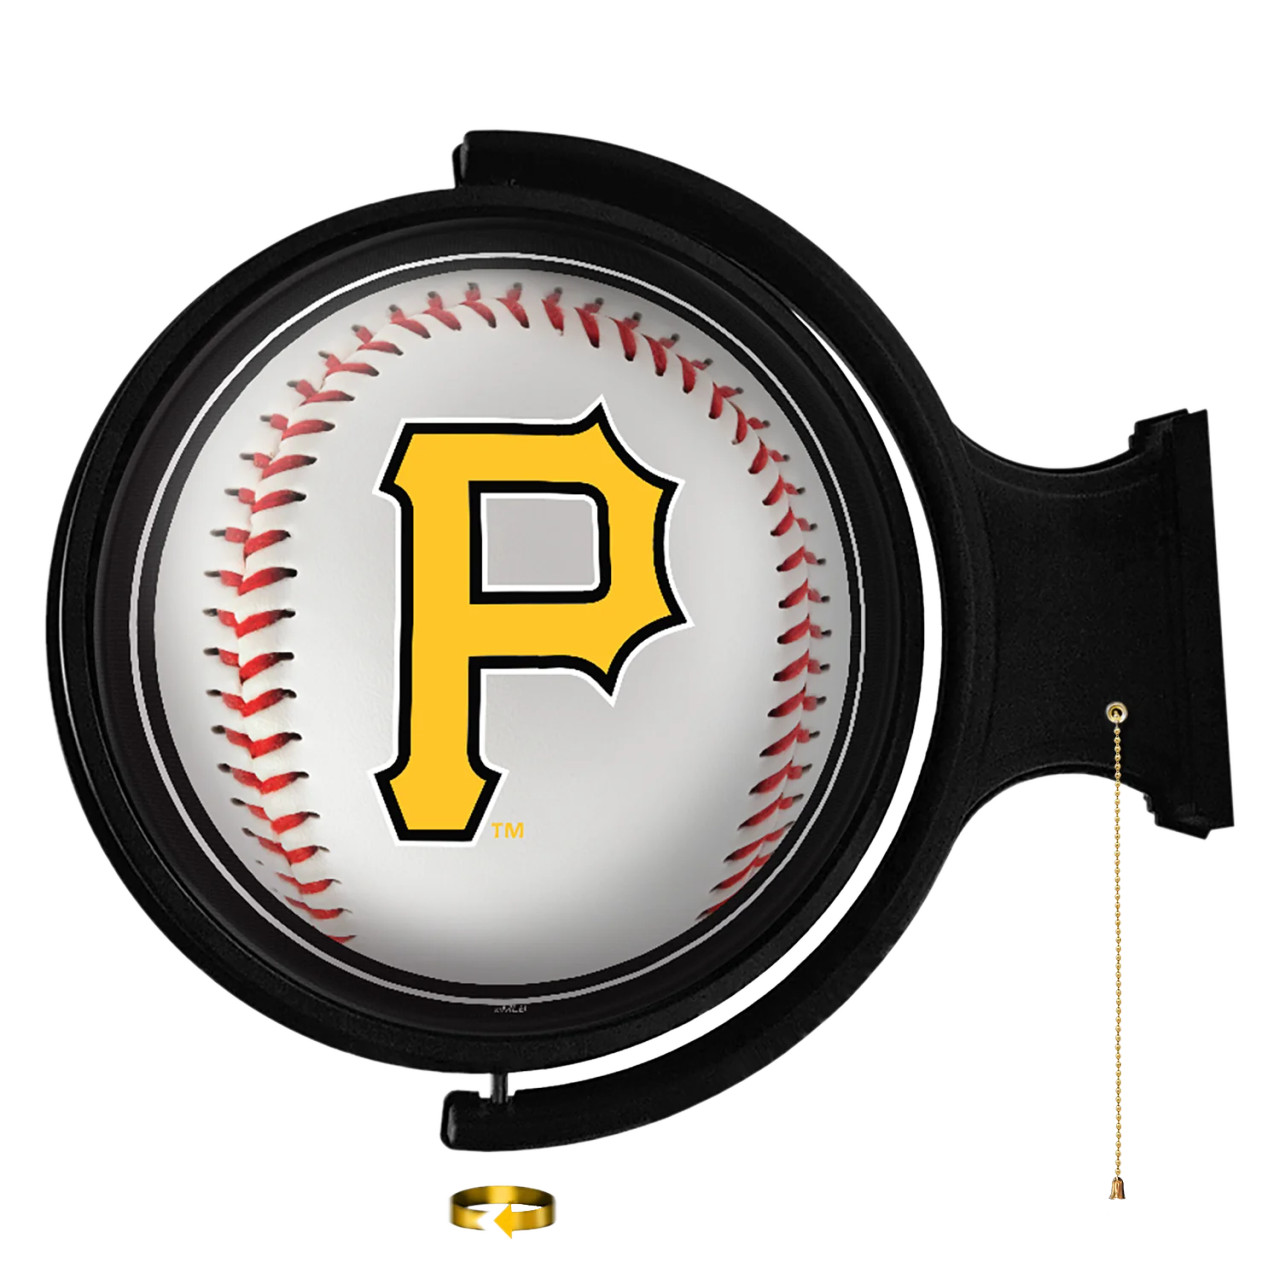 PIT, Pittsburgh, Pirates, Baseball, Original, Round, Rotating, Lighted, Wall, Sign, MBPITT-115-31, The Fan-Brand, MLB, 704384952305